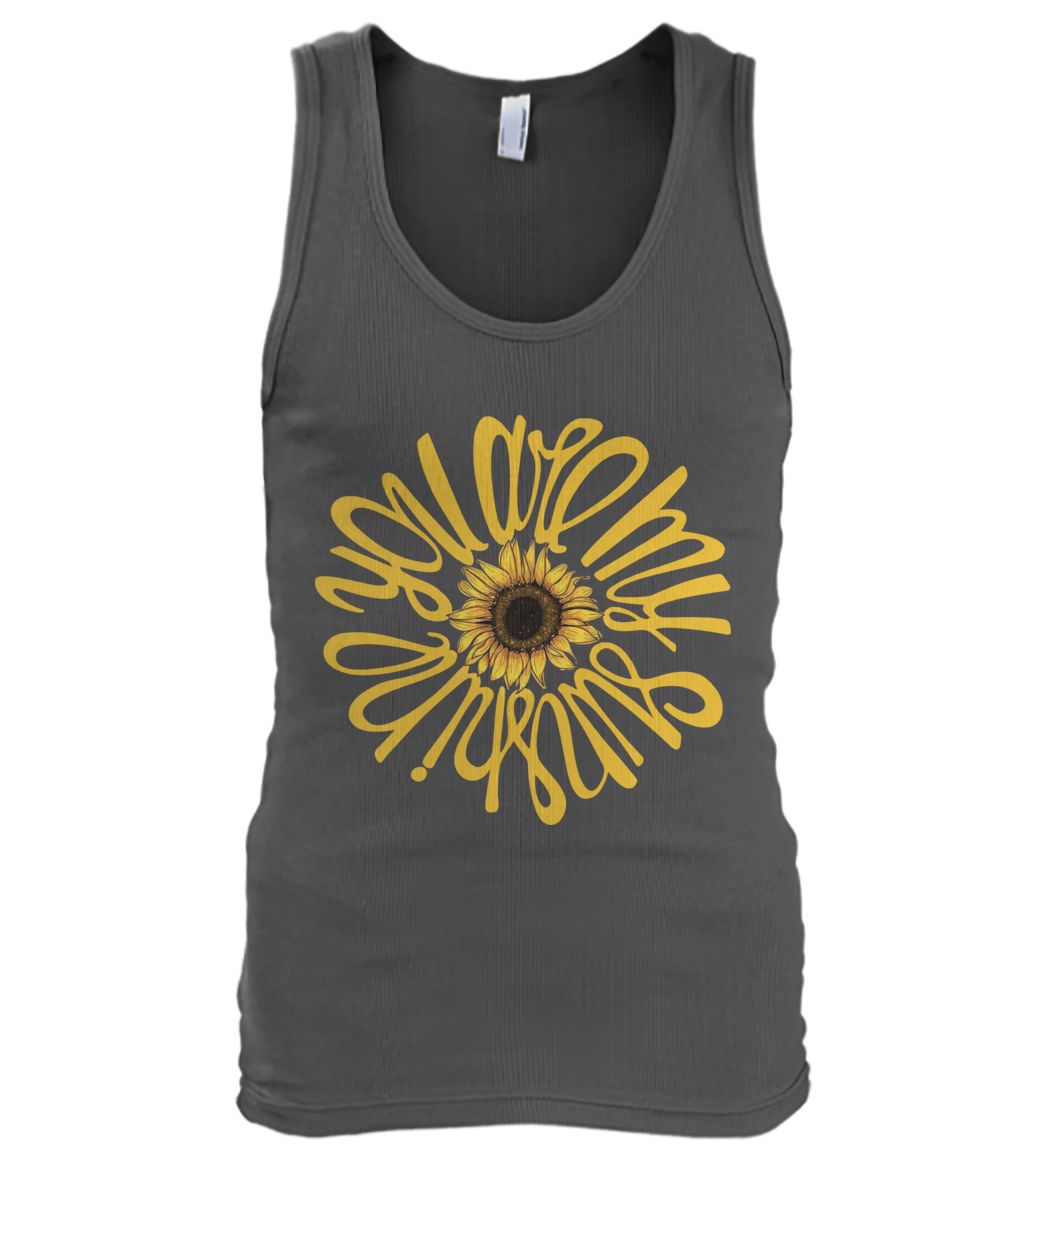 You are my sunshine sunflower men's tank top